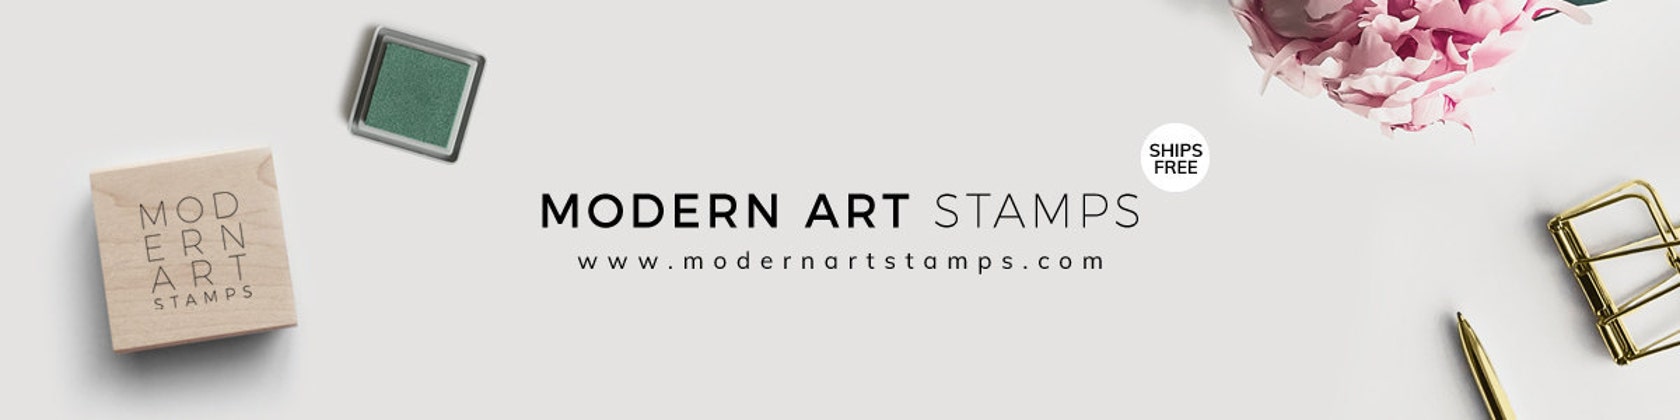 Business Stamp : Modern Art Stamps